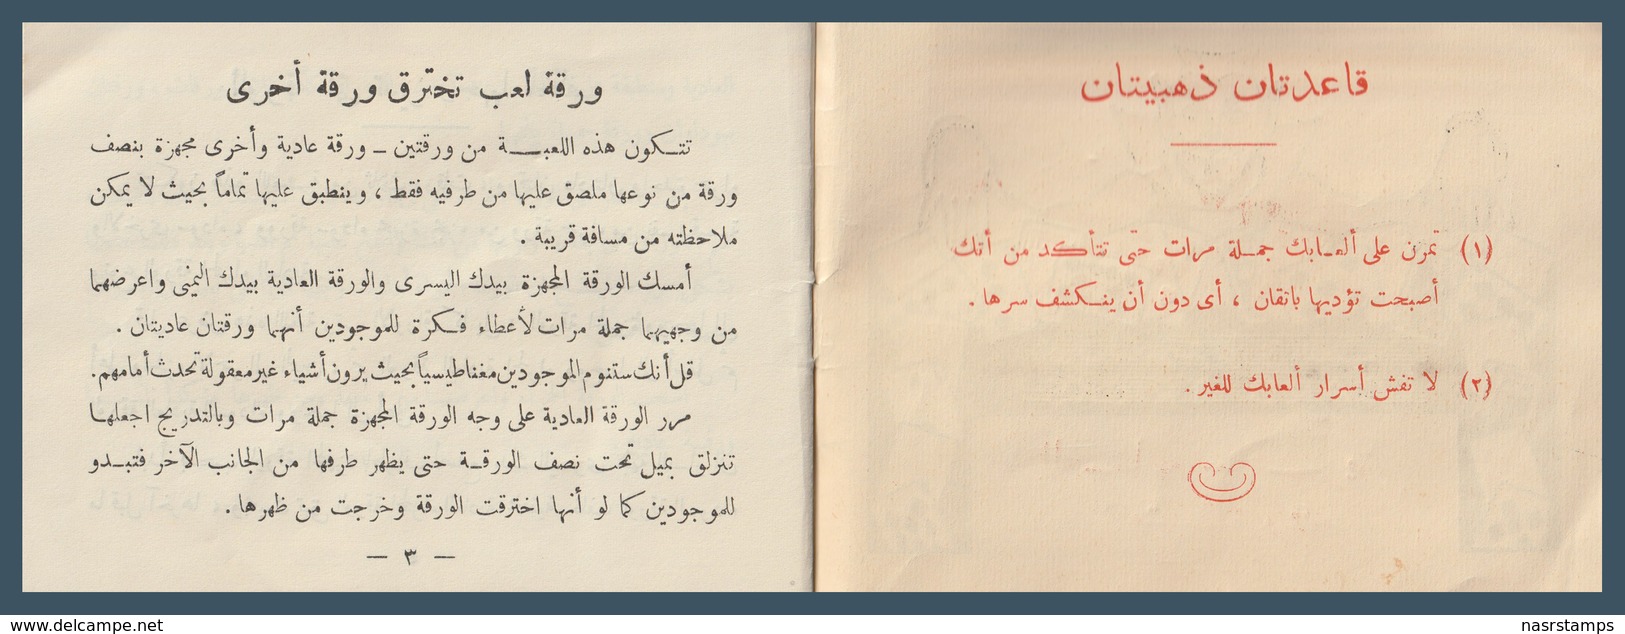 Rare - Vintage Booklet - METEOR - MAGIC TRICKS - 45 Pages - Arabic & English - 5 Scan - Hojas Y Bloques